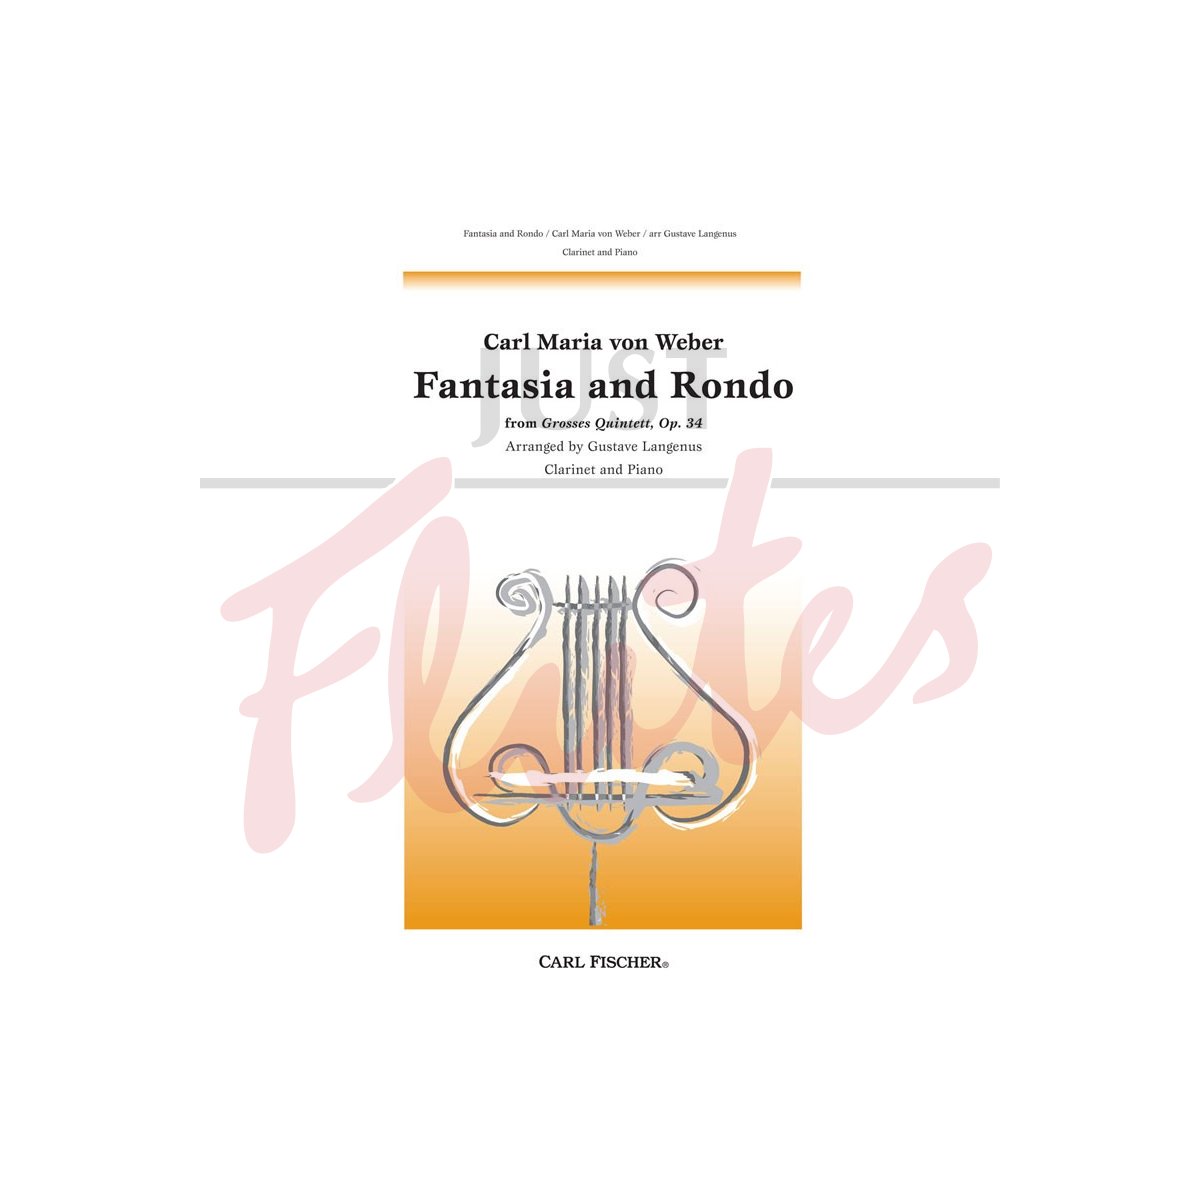 Fantasia and Rondo from Grosses Quintett